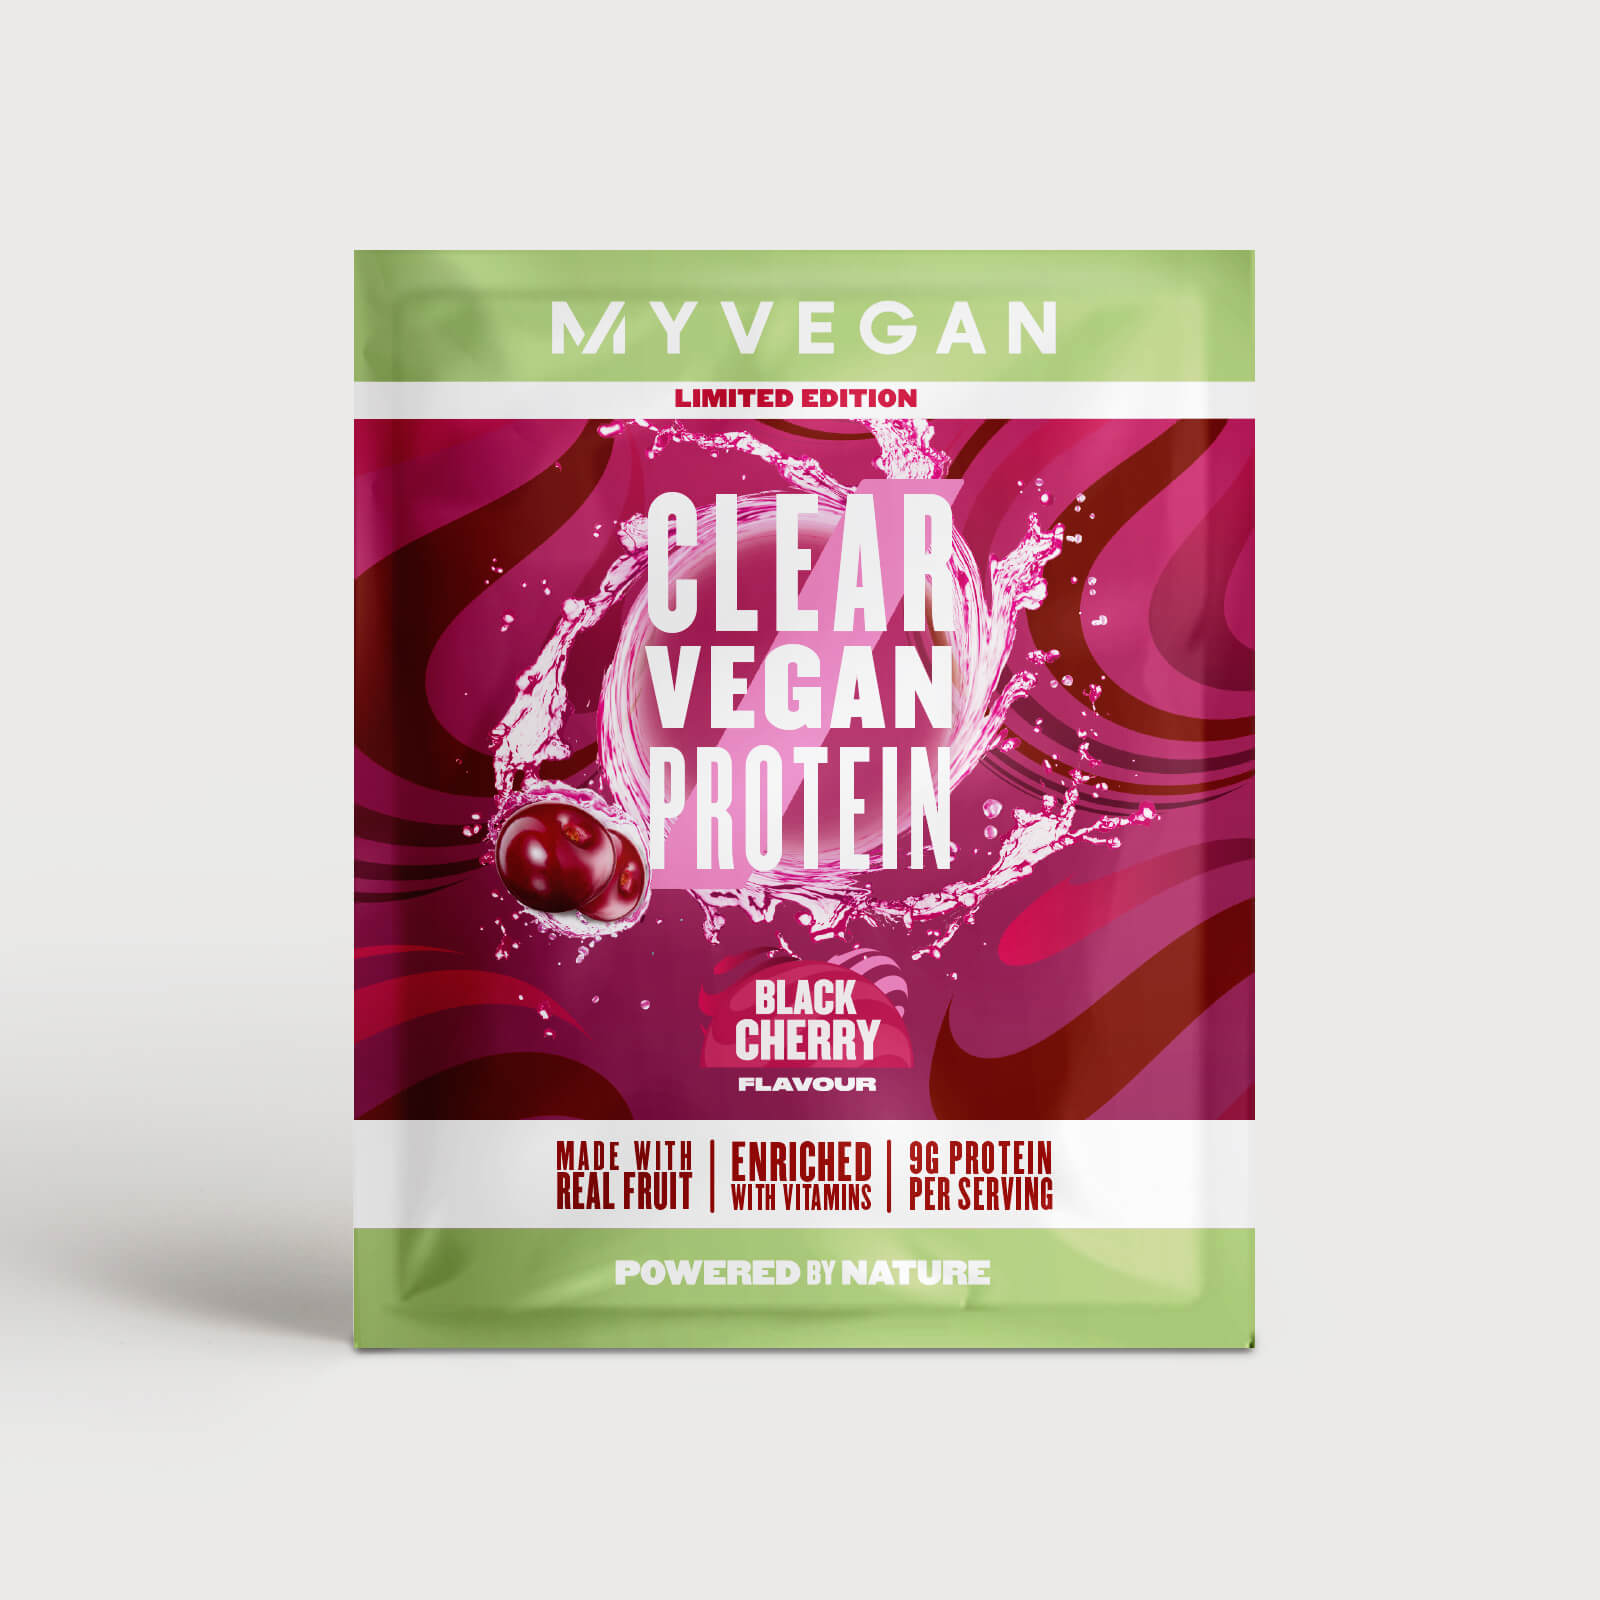 Clear Vegan Protein (Sample) - 16g - Black Cherry